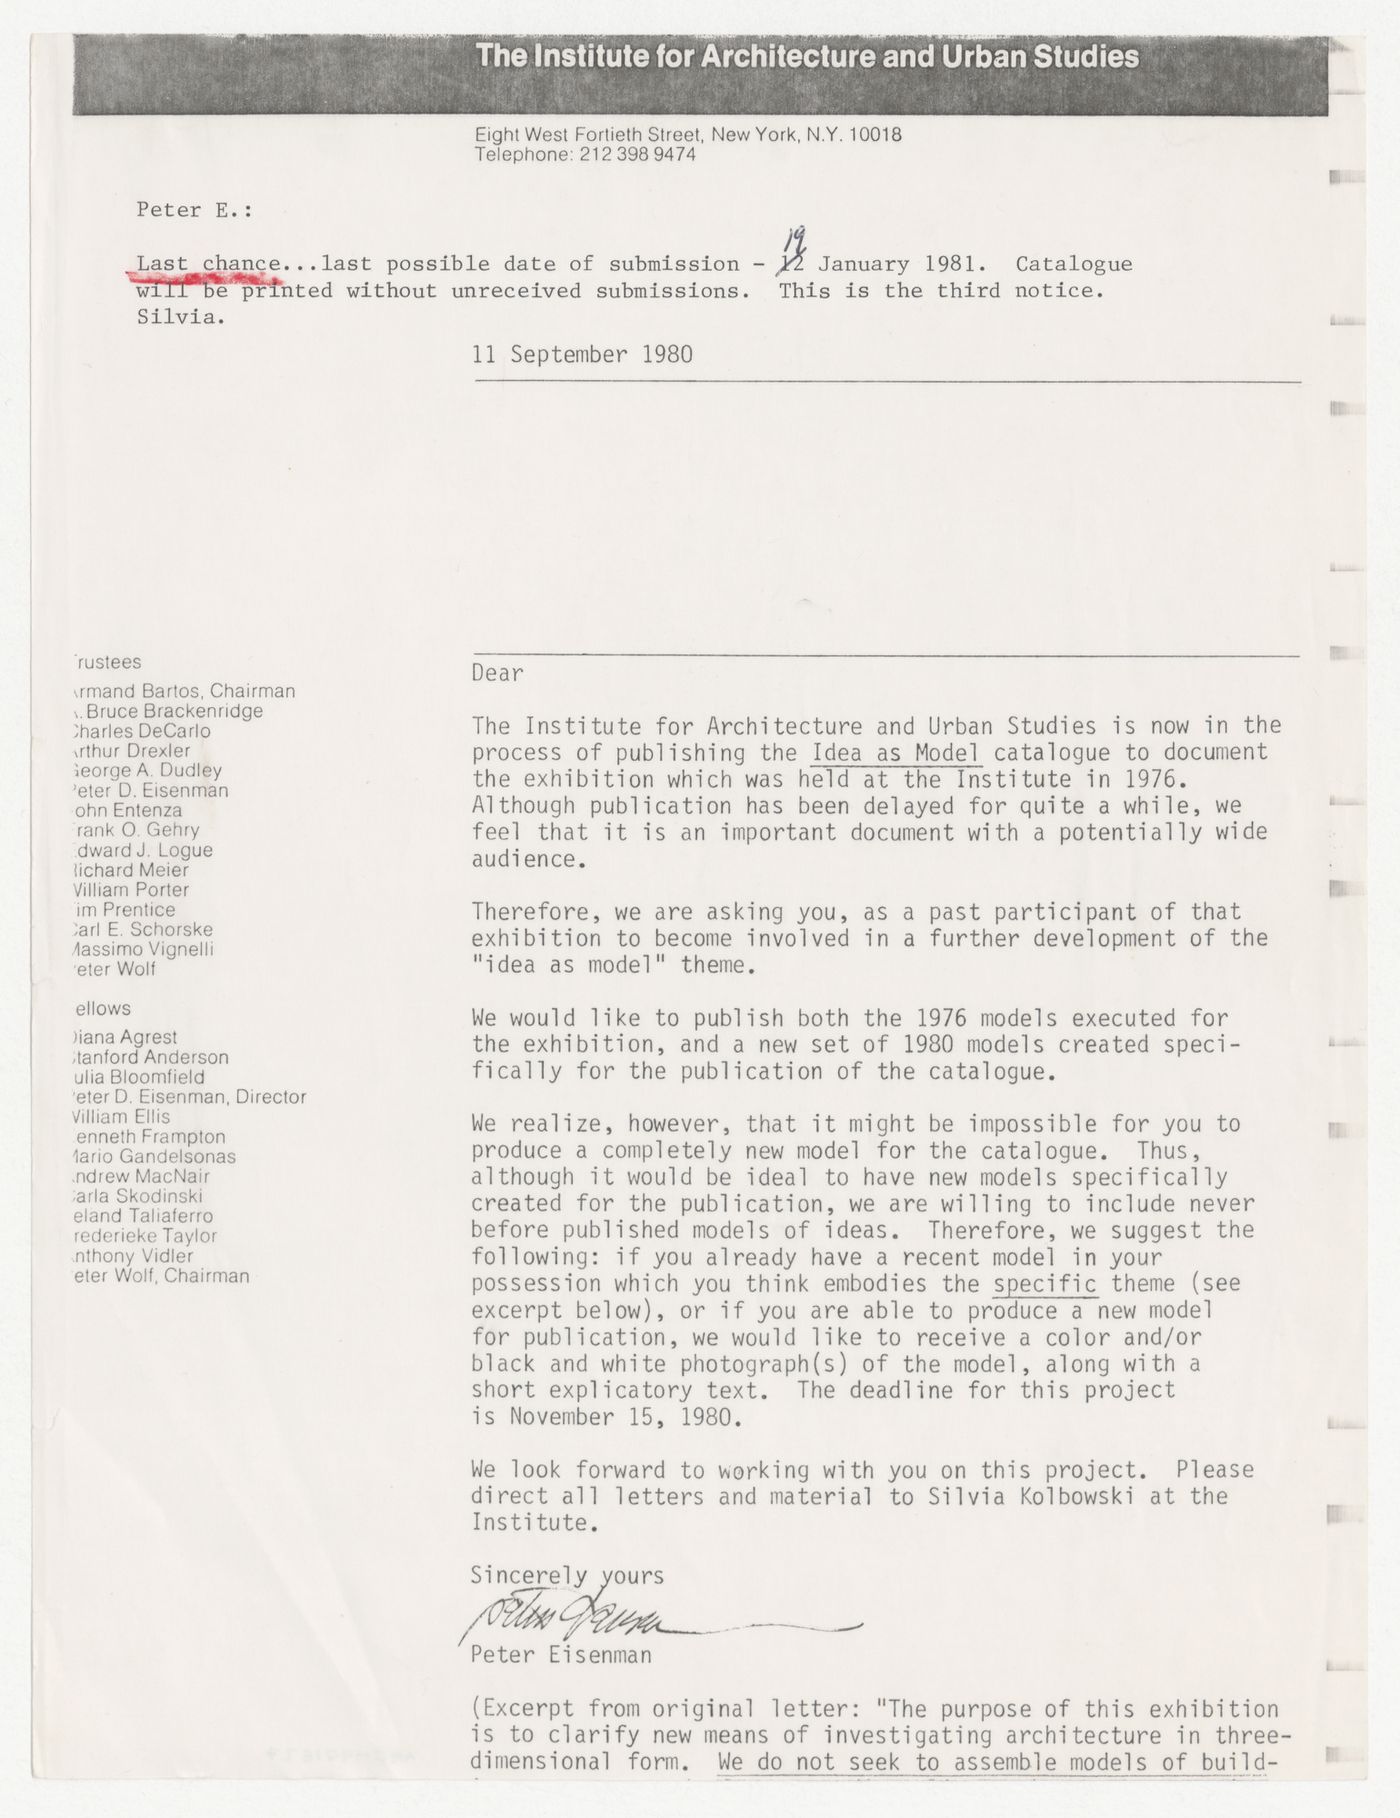 Memorandum from Silvia Kolbowski to Peter D. Eisenman about publication deadline for the Idea as Model catalogue